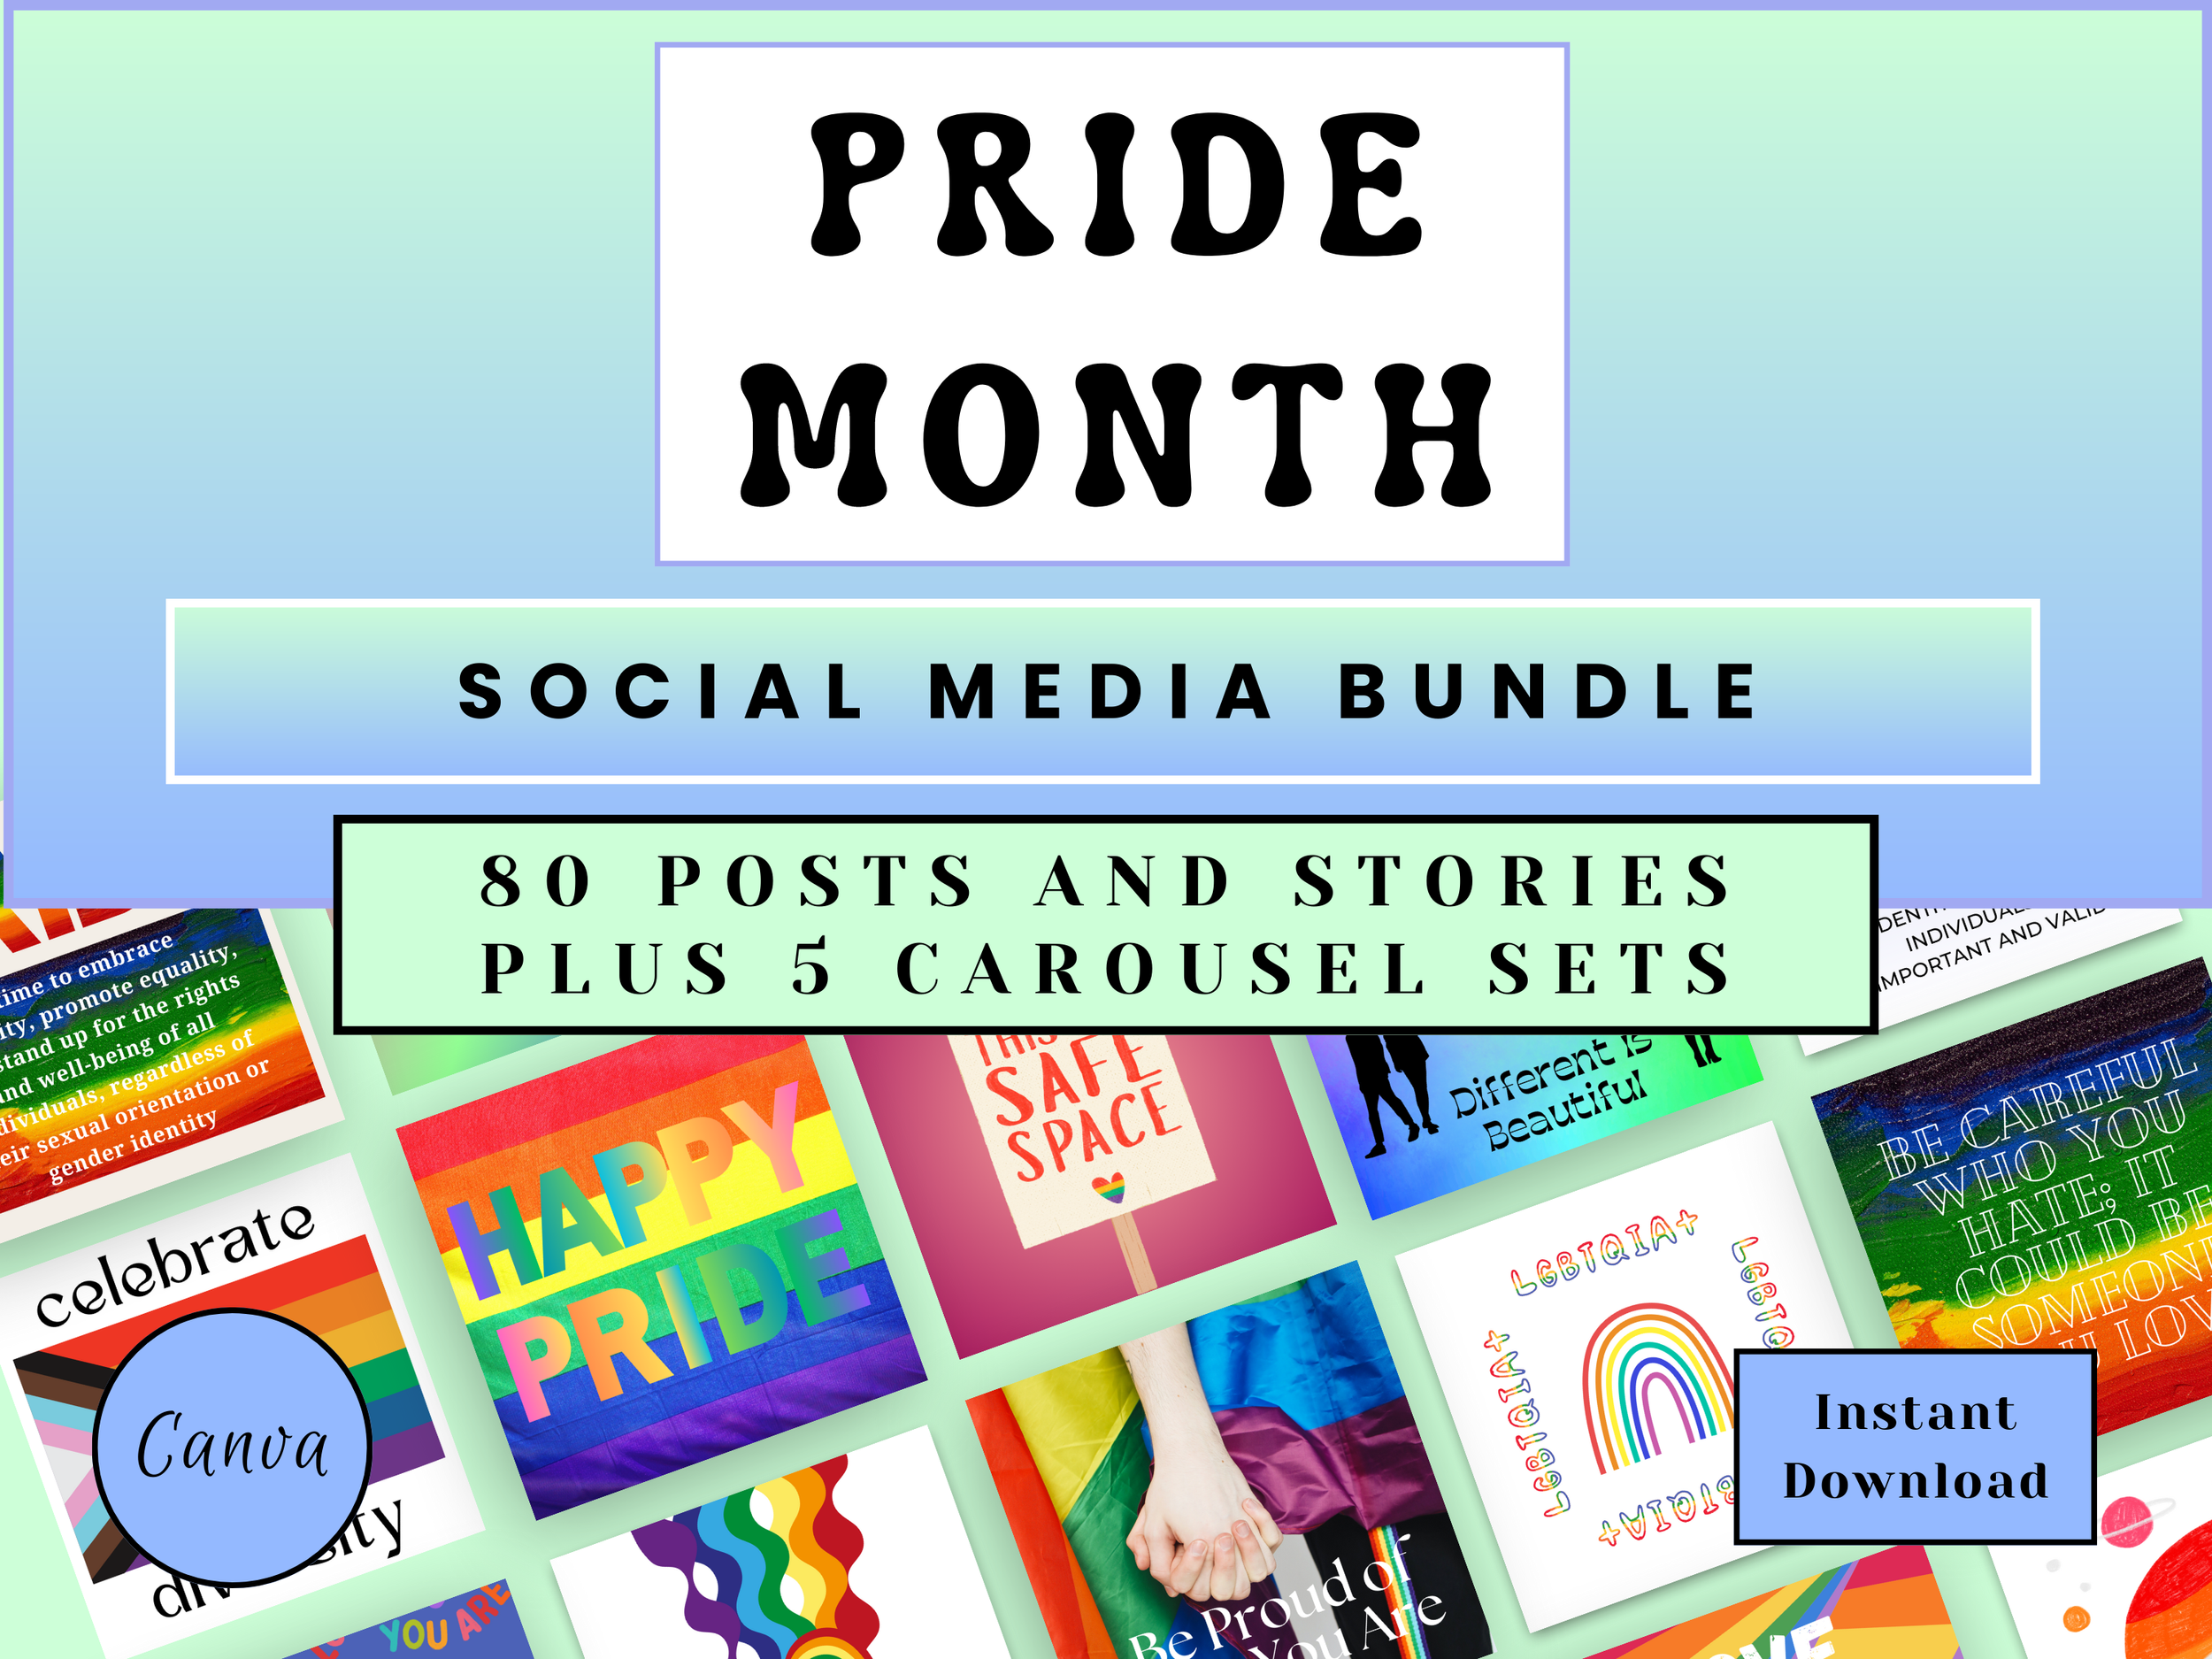 Pride Month Template Bundle ETSY PRODUCT LONG LISTING PHOTOS - HOLPRIDE L34.png